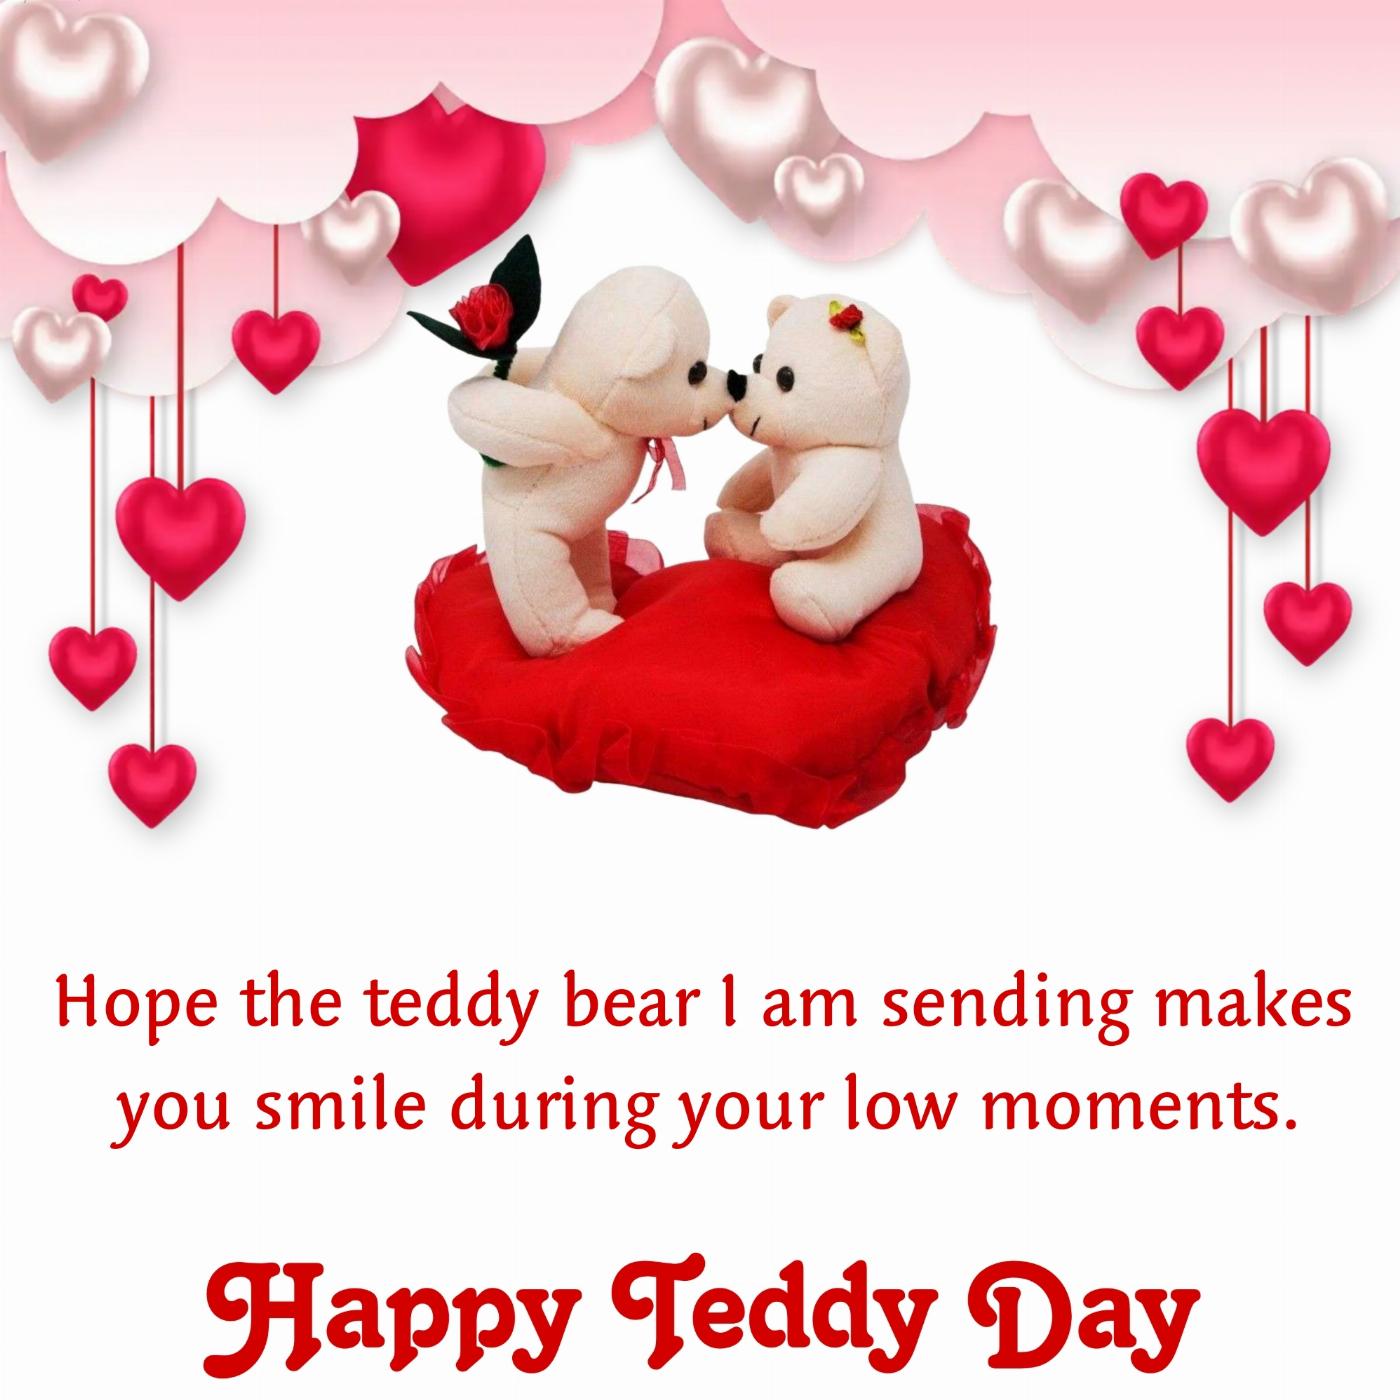 Hope the teddy bear I am sending makes you smile